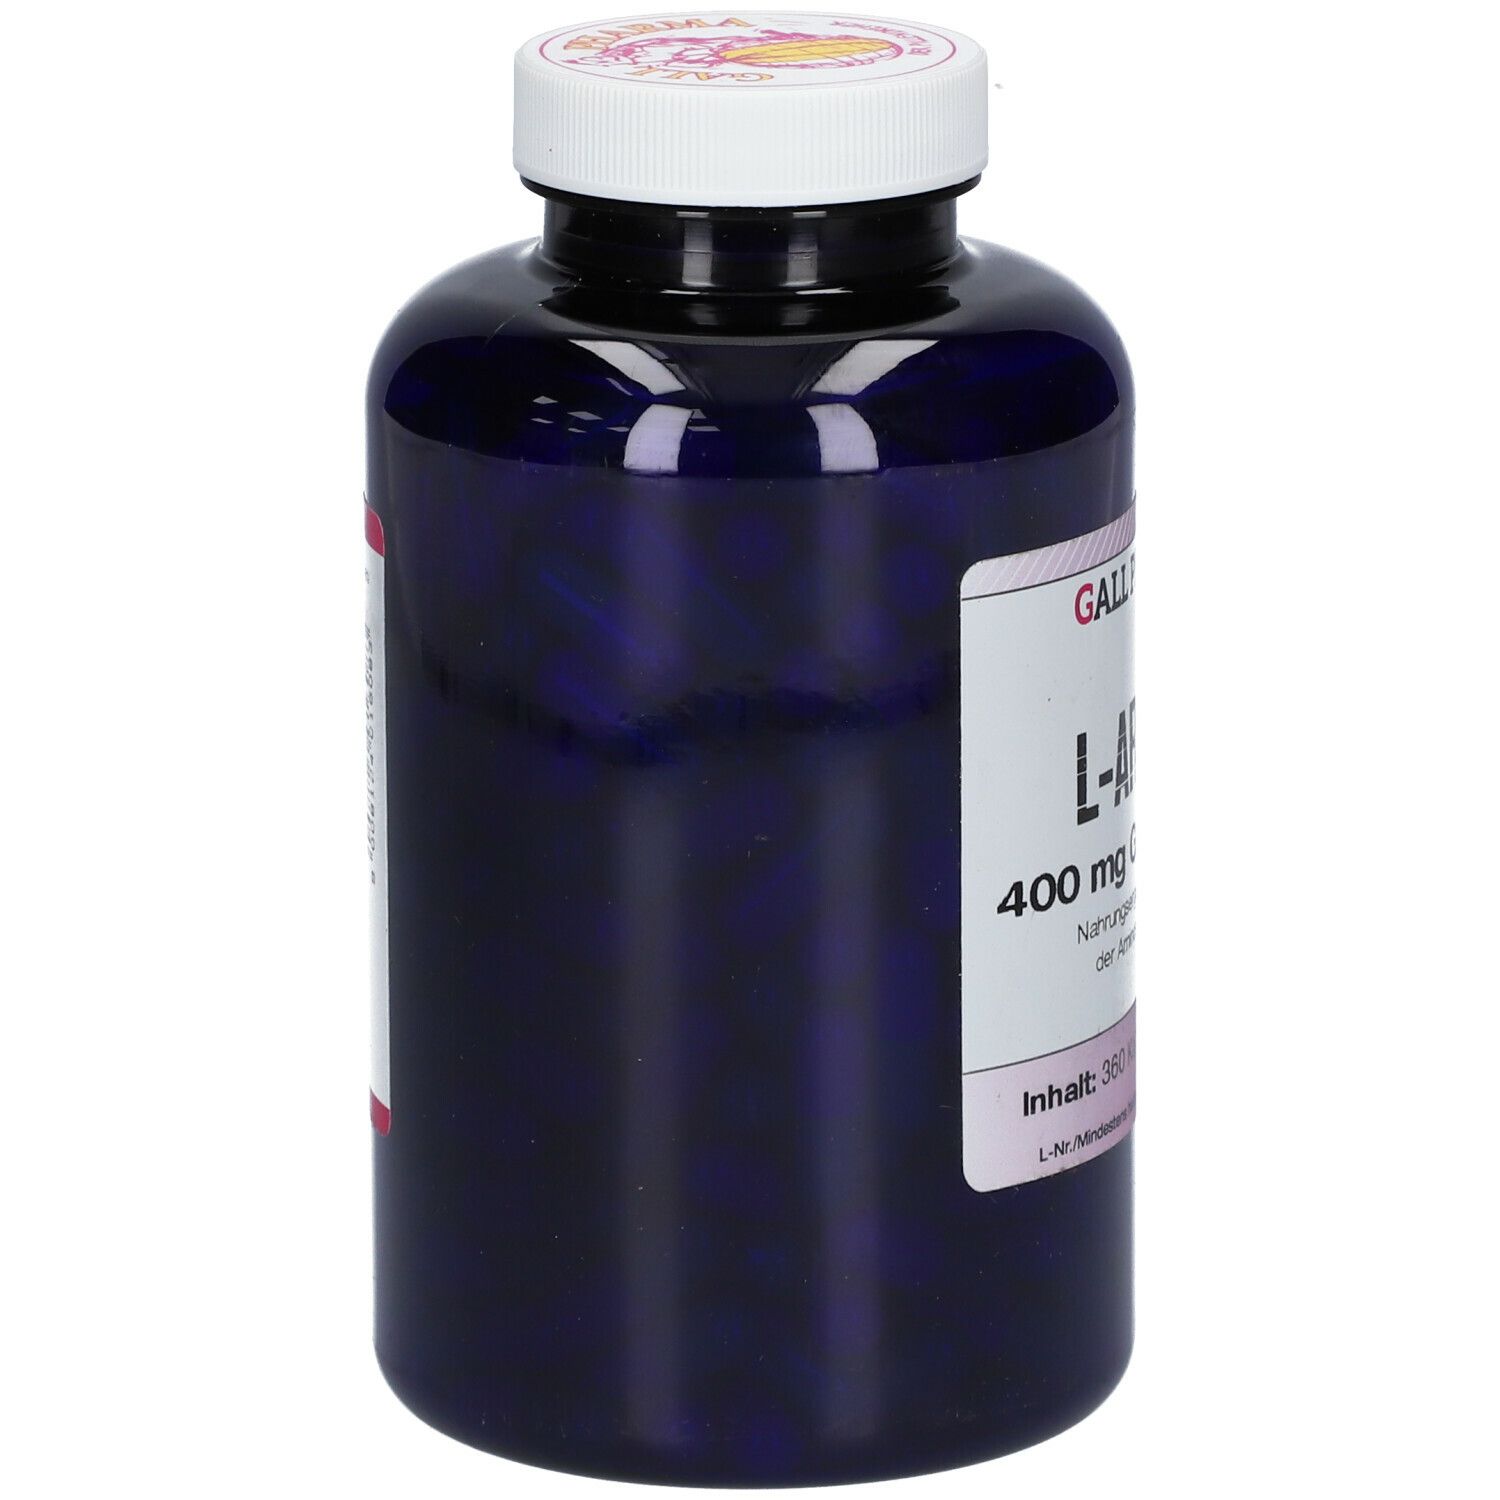 GALL PHARMA L-Arginin 400 mg GPH